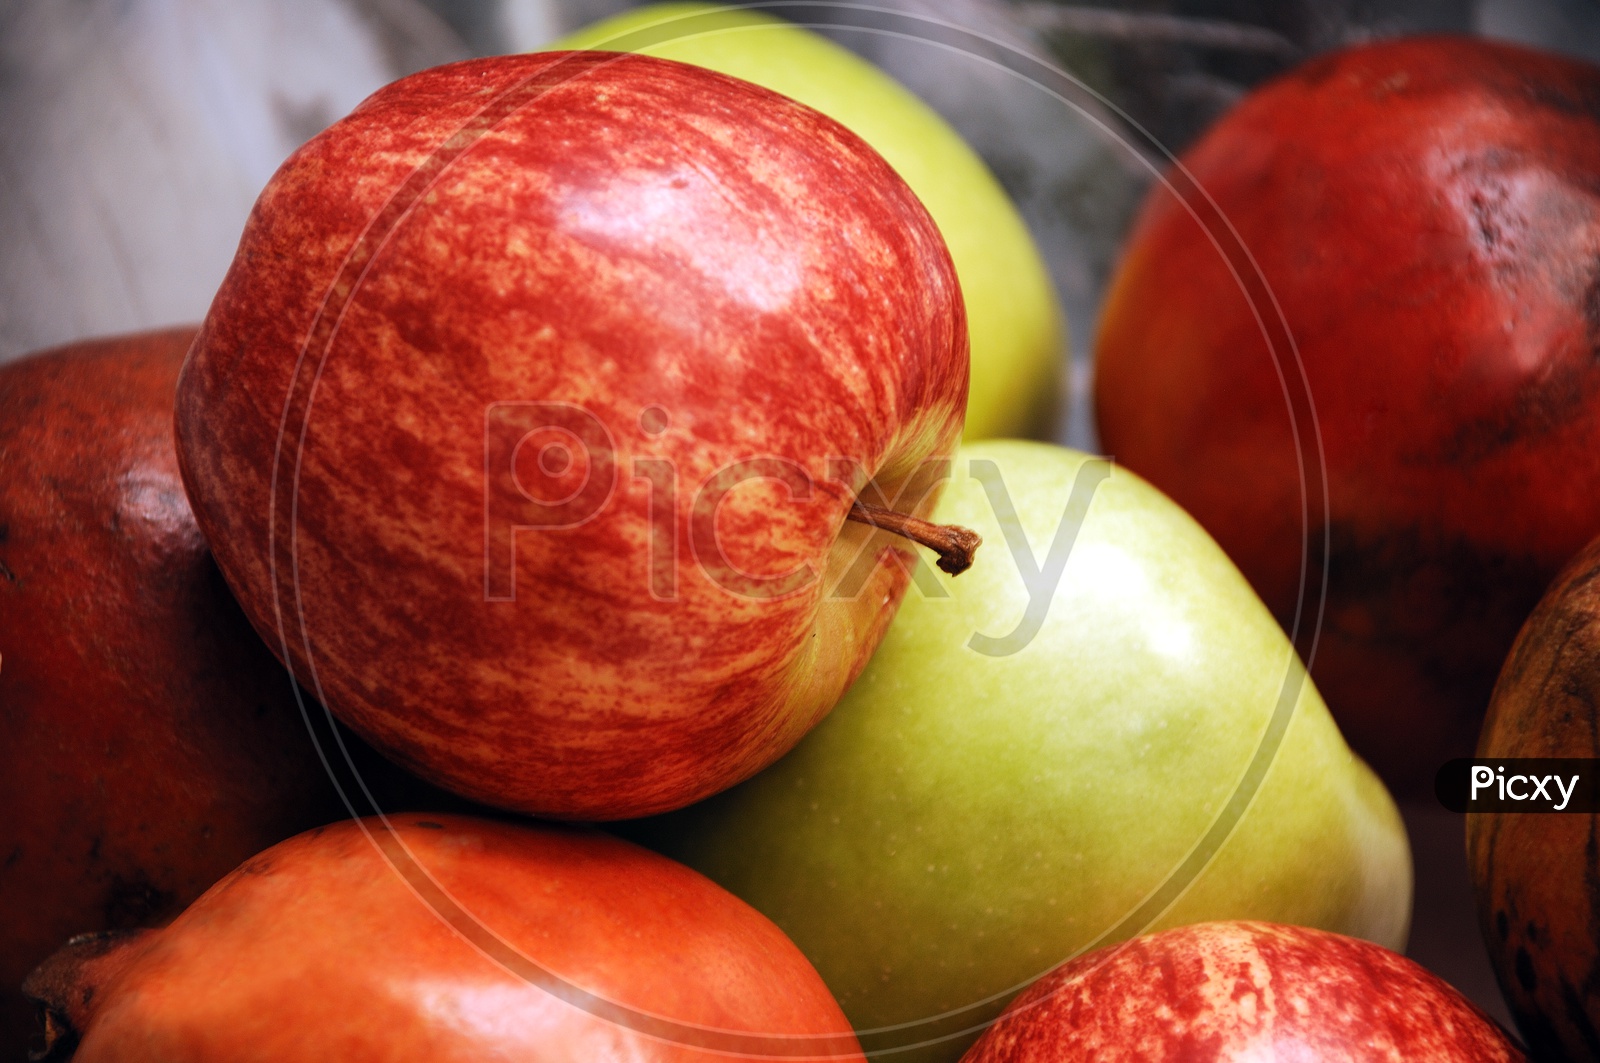 Apple among the fruits